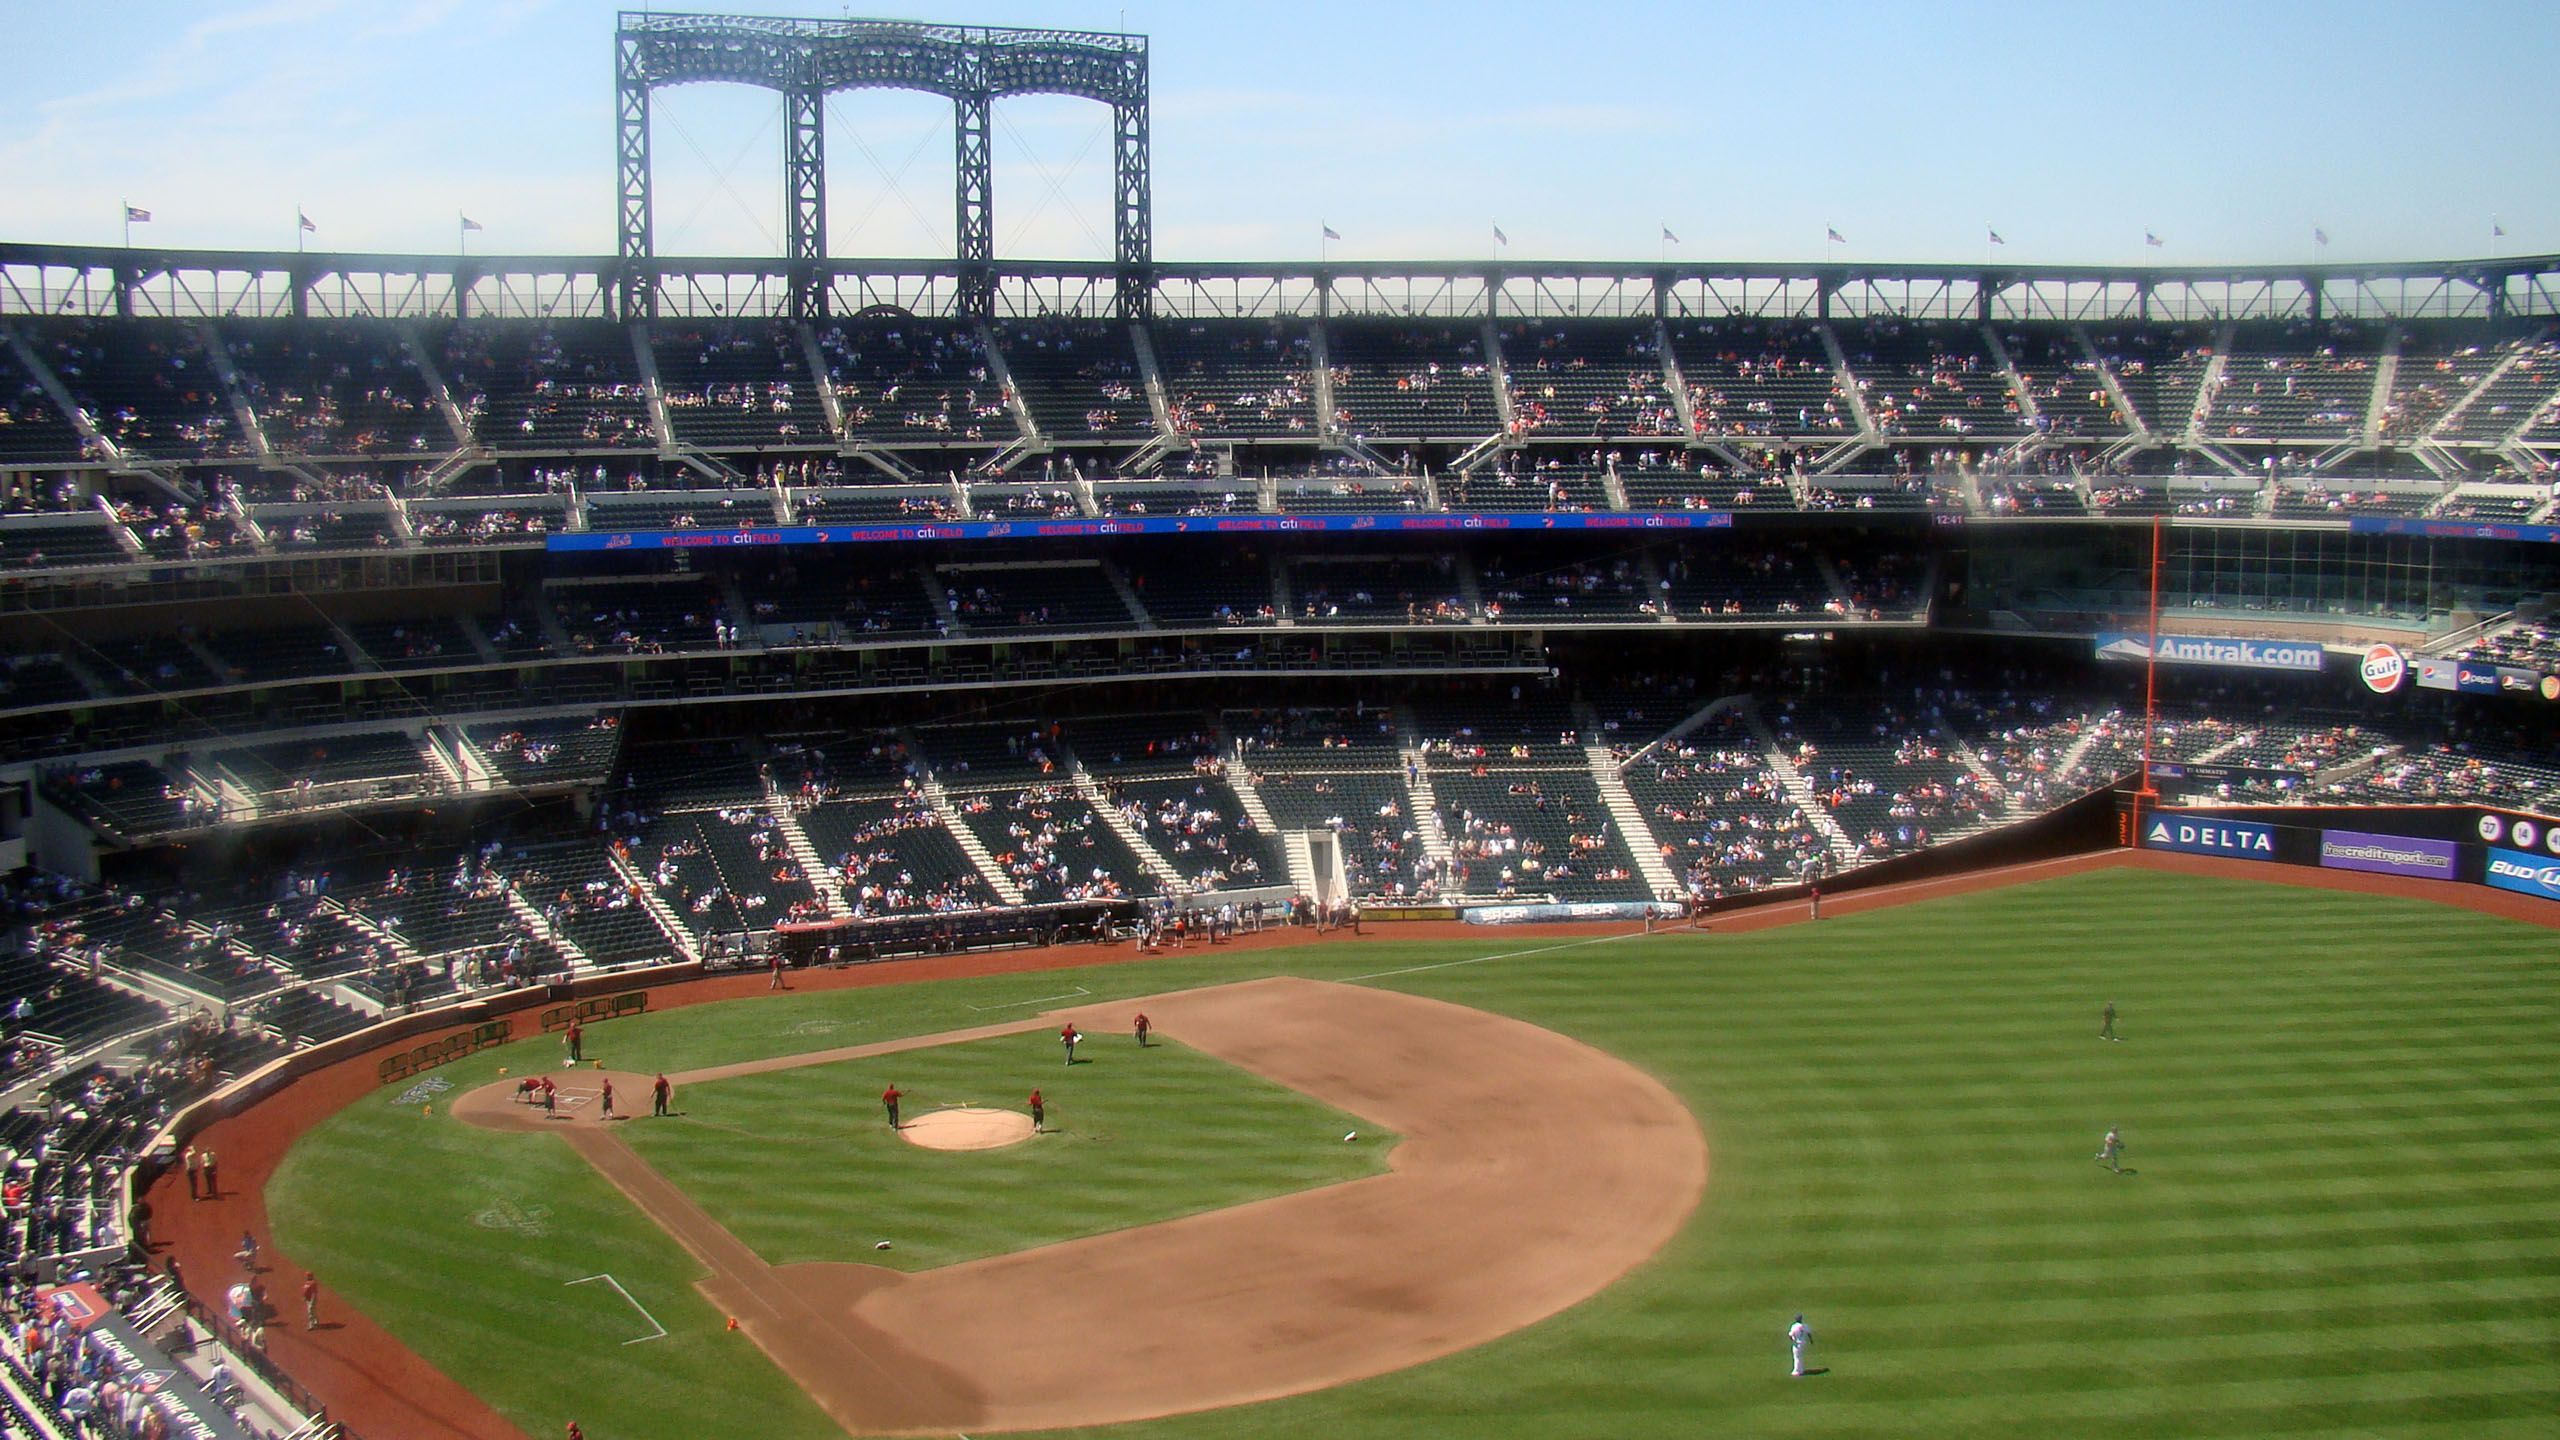 New-York-Mets-Stadium-2560x1440-Wallpaper.jpg